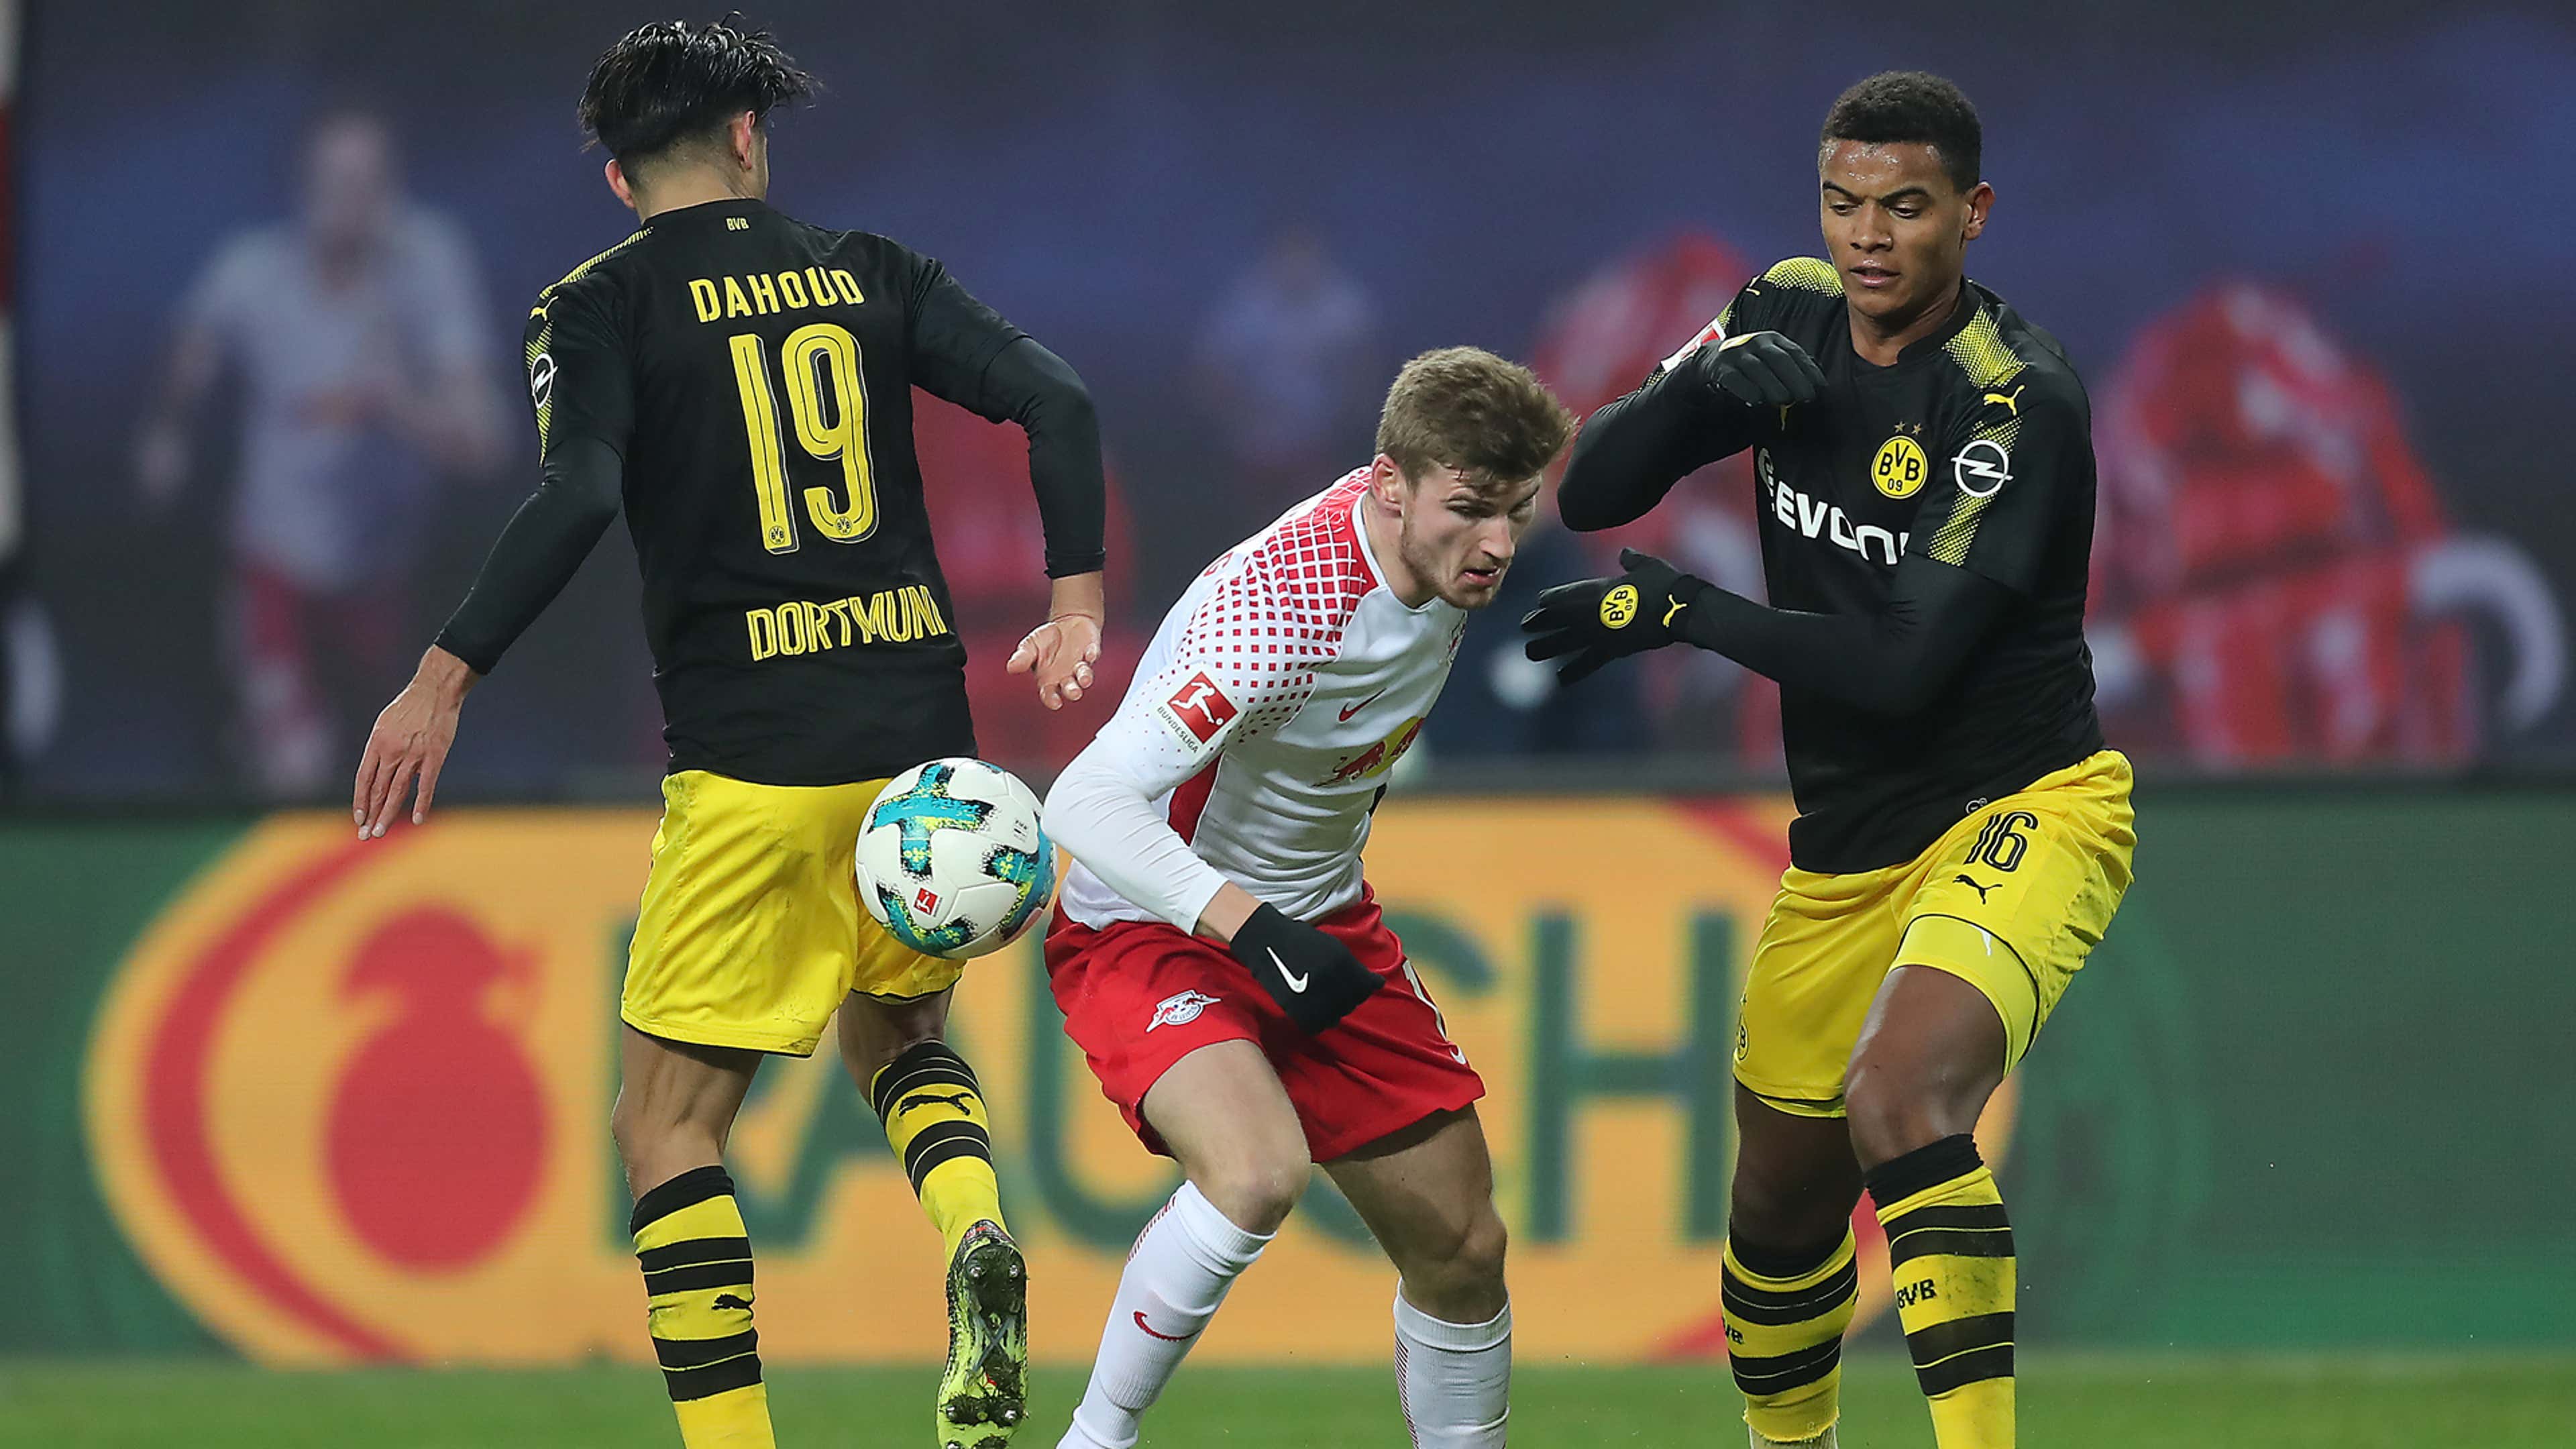 RB Leipzig Borussia Dortmund Werner Dahoud Akanji 03032018